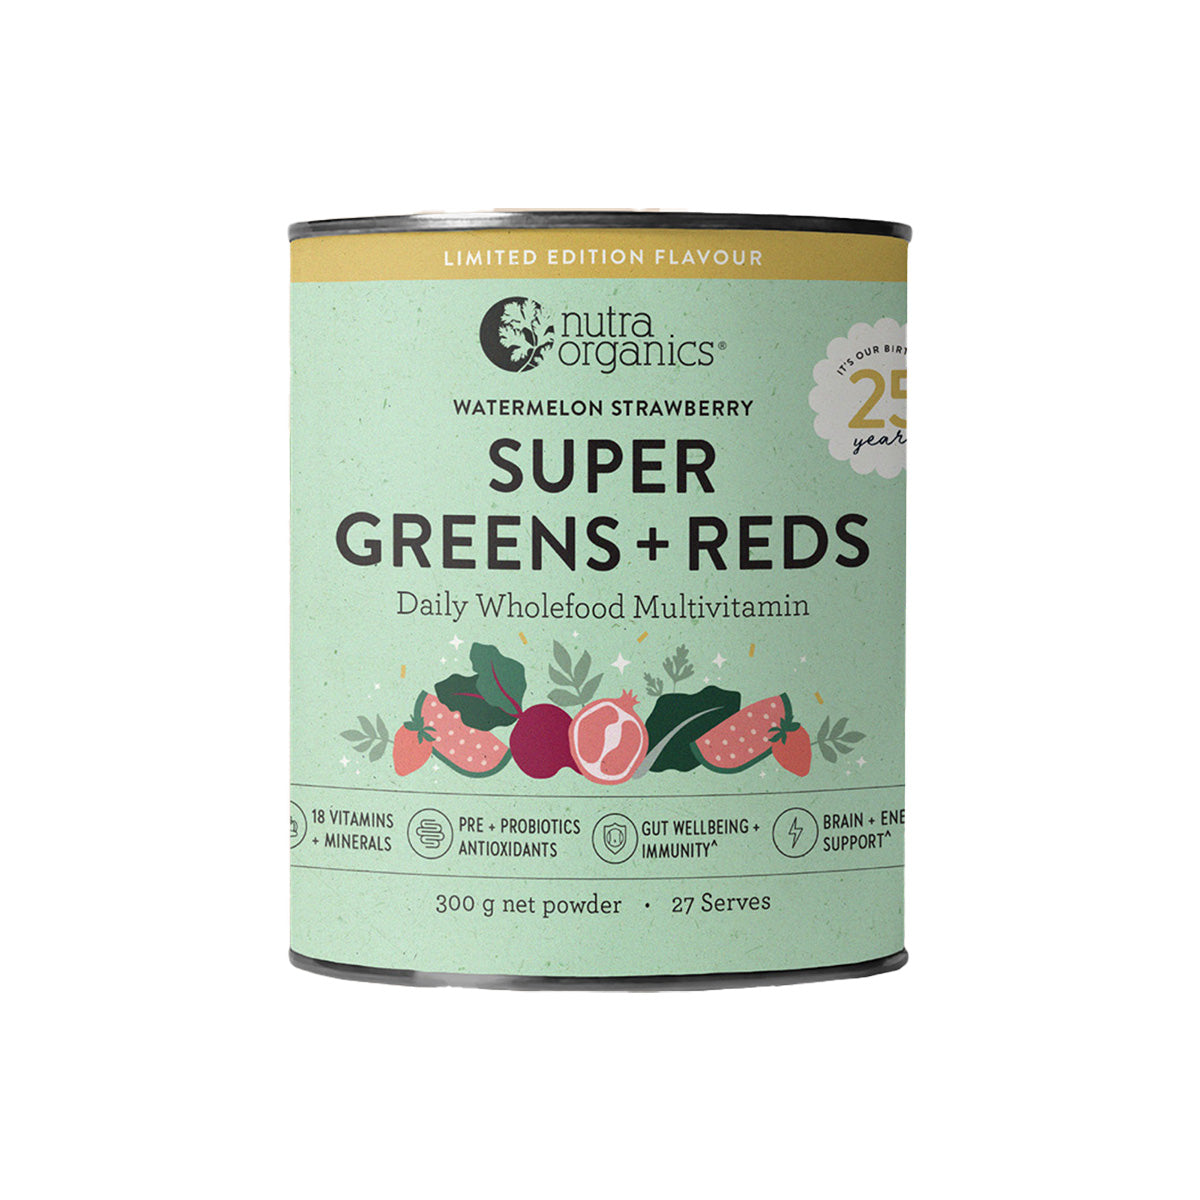 Nutra Organics Super Greens + Reds Watermelon Strawberry 300g - Limited Edition